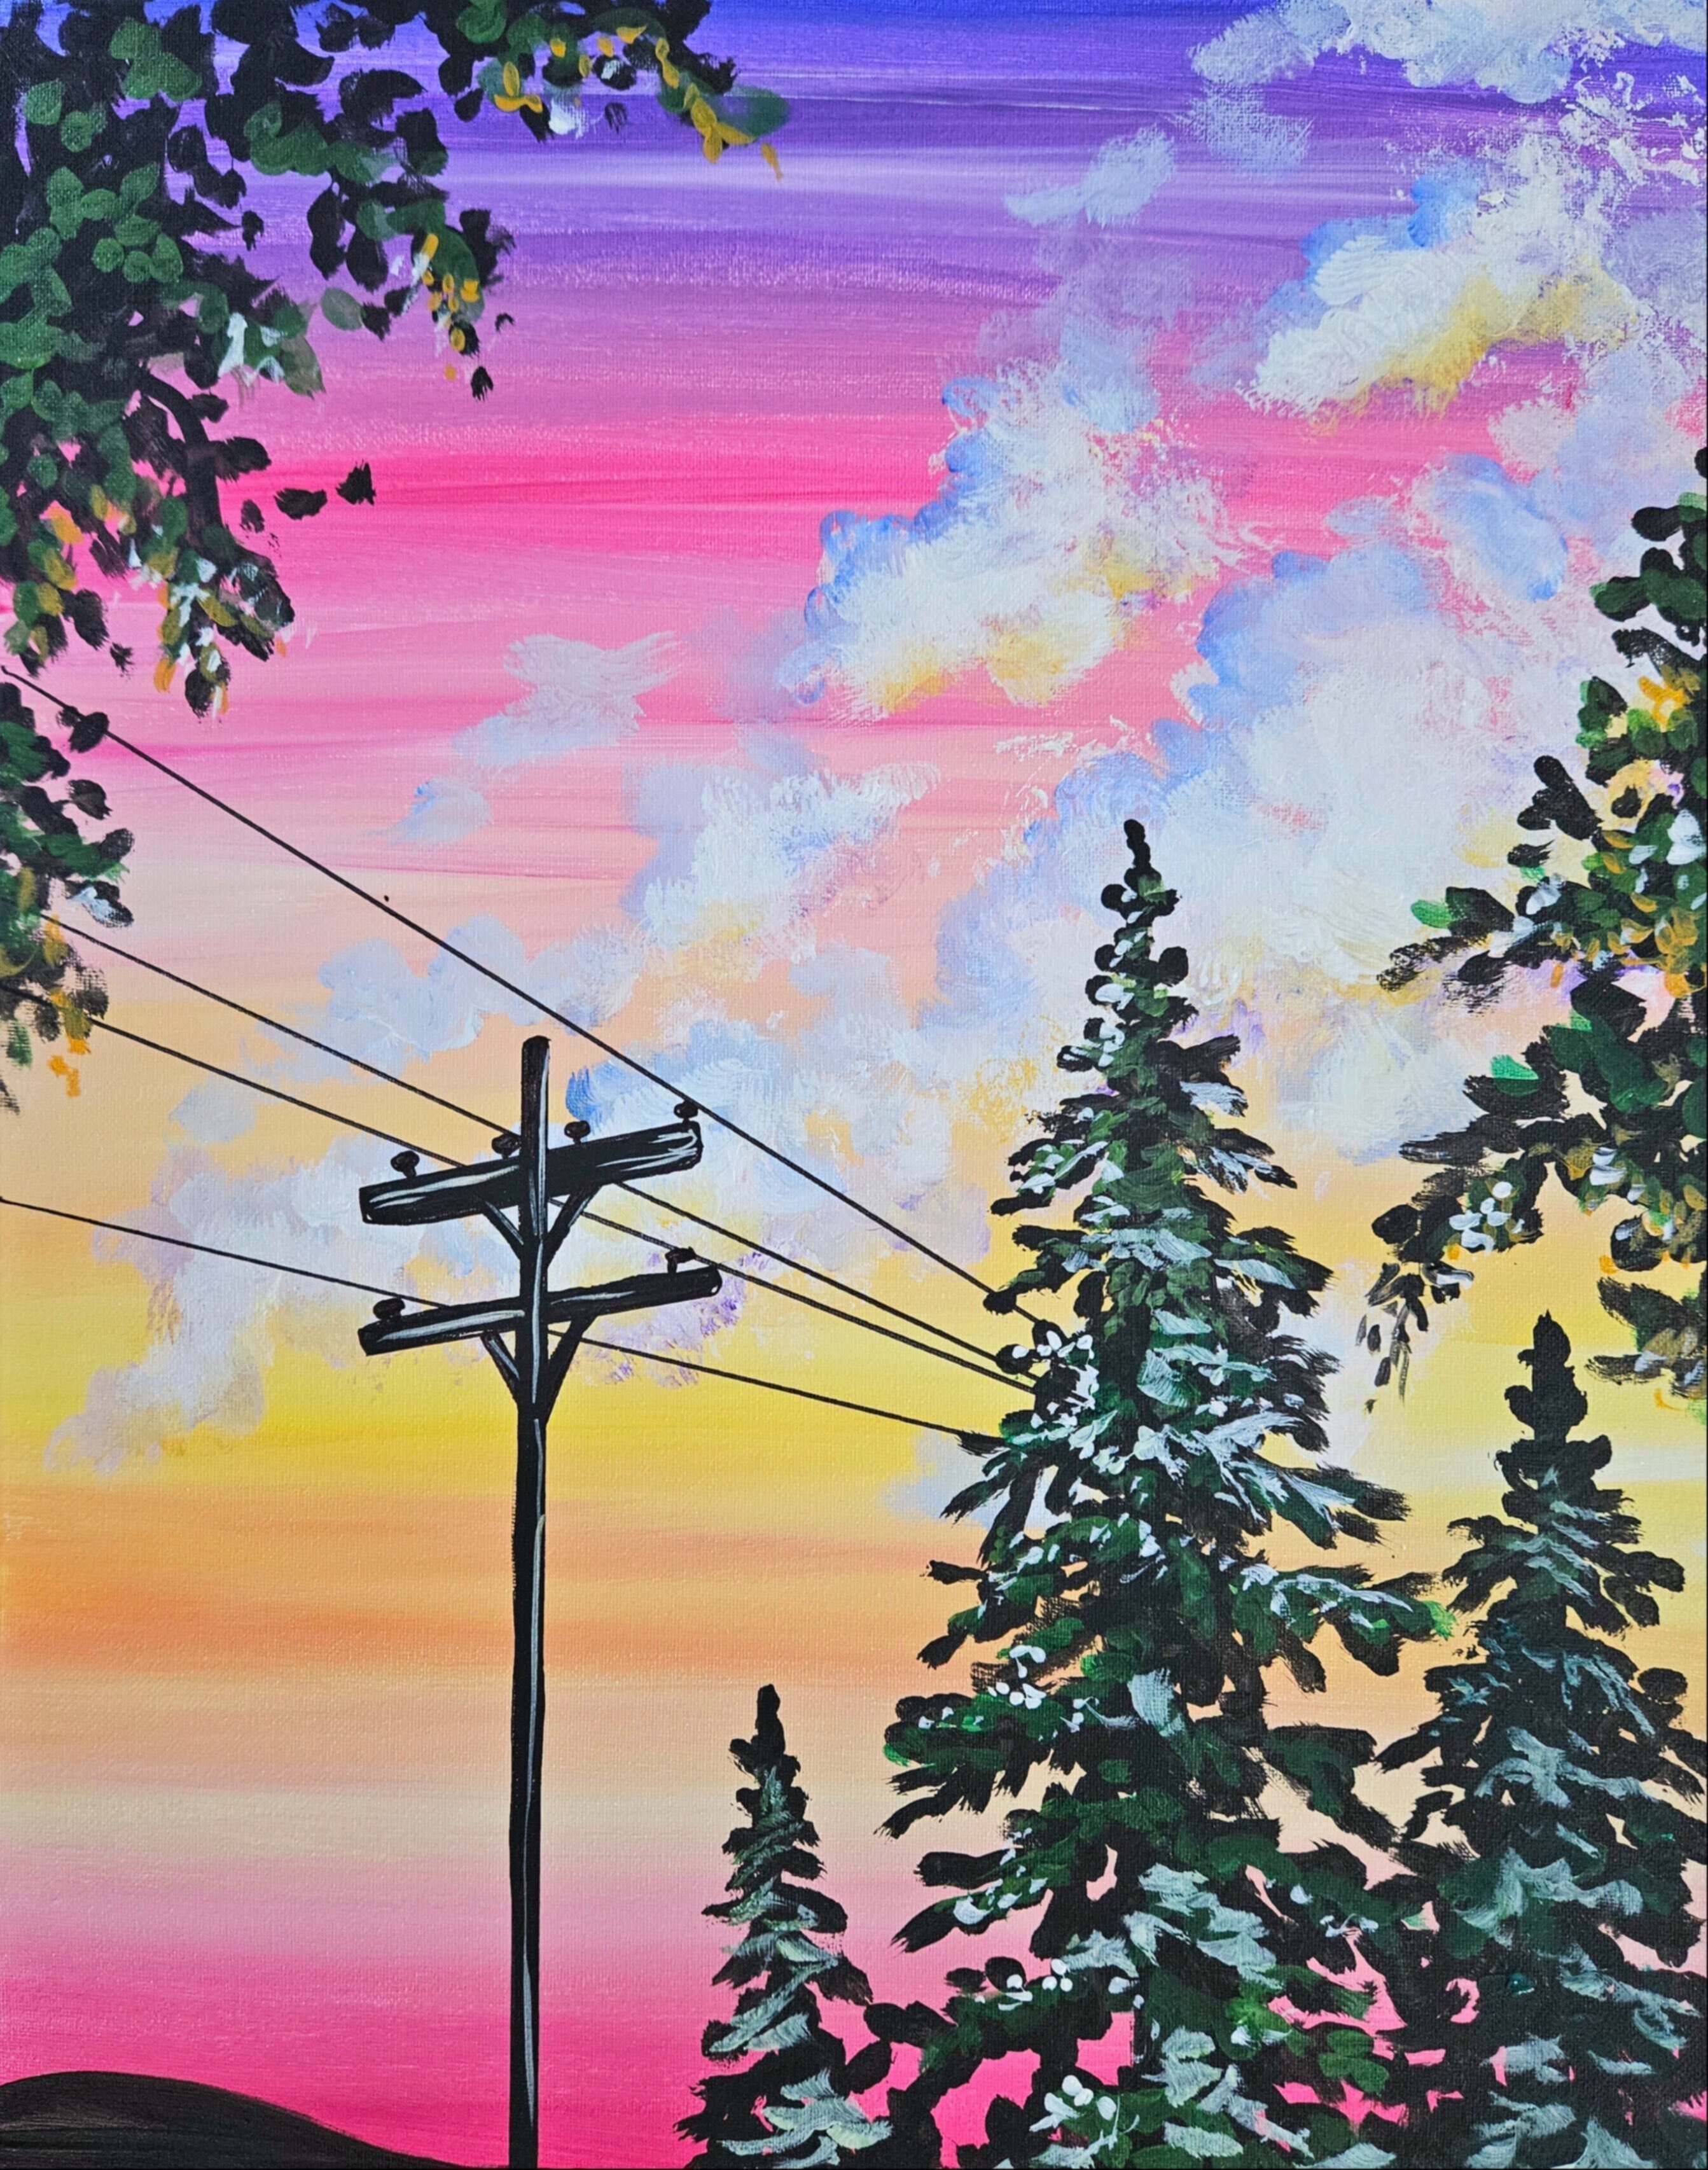 When the Sky Speaks - 16x20 Acrylic on Canvas